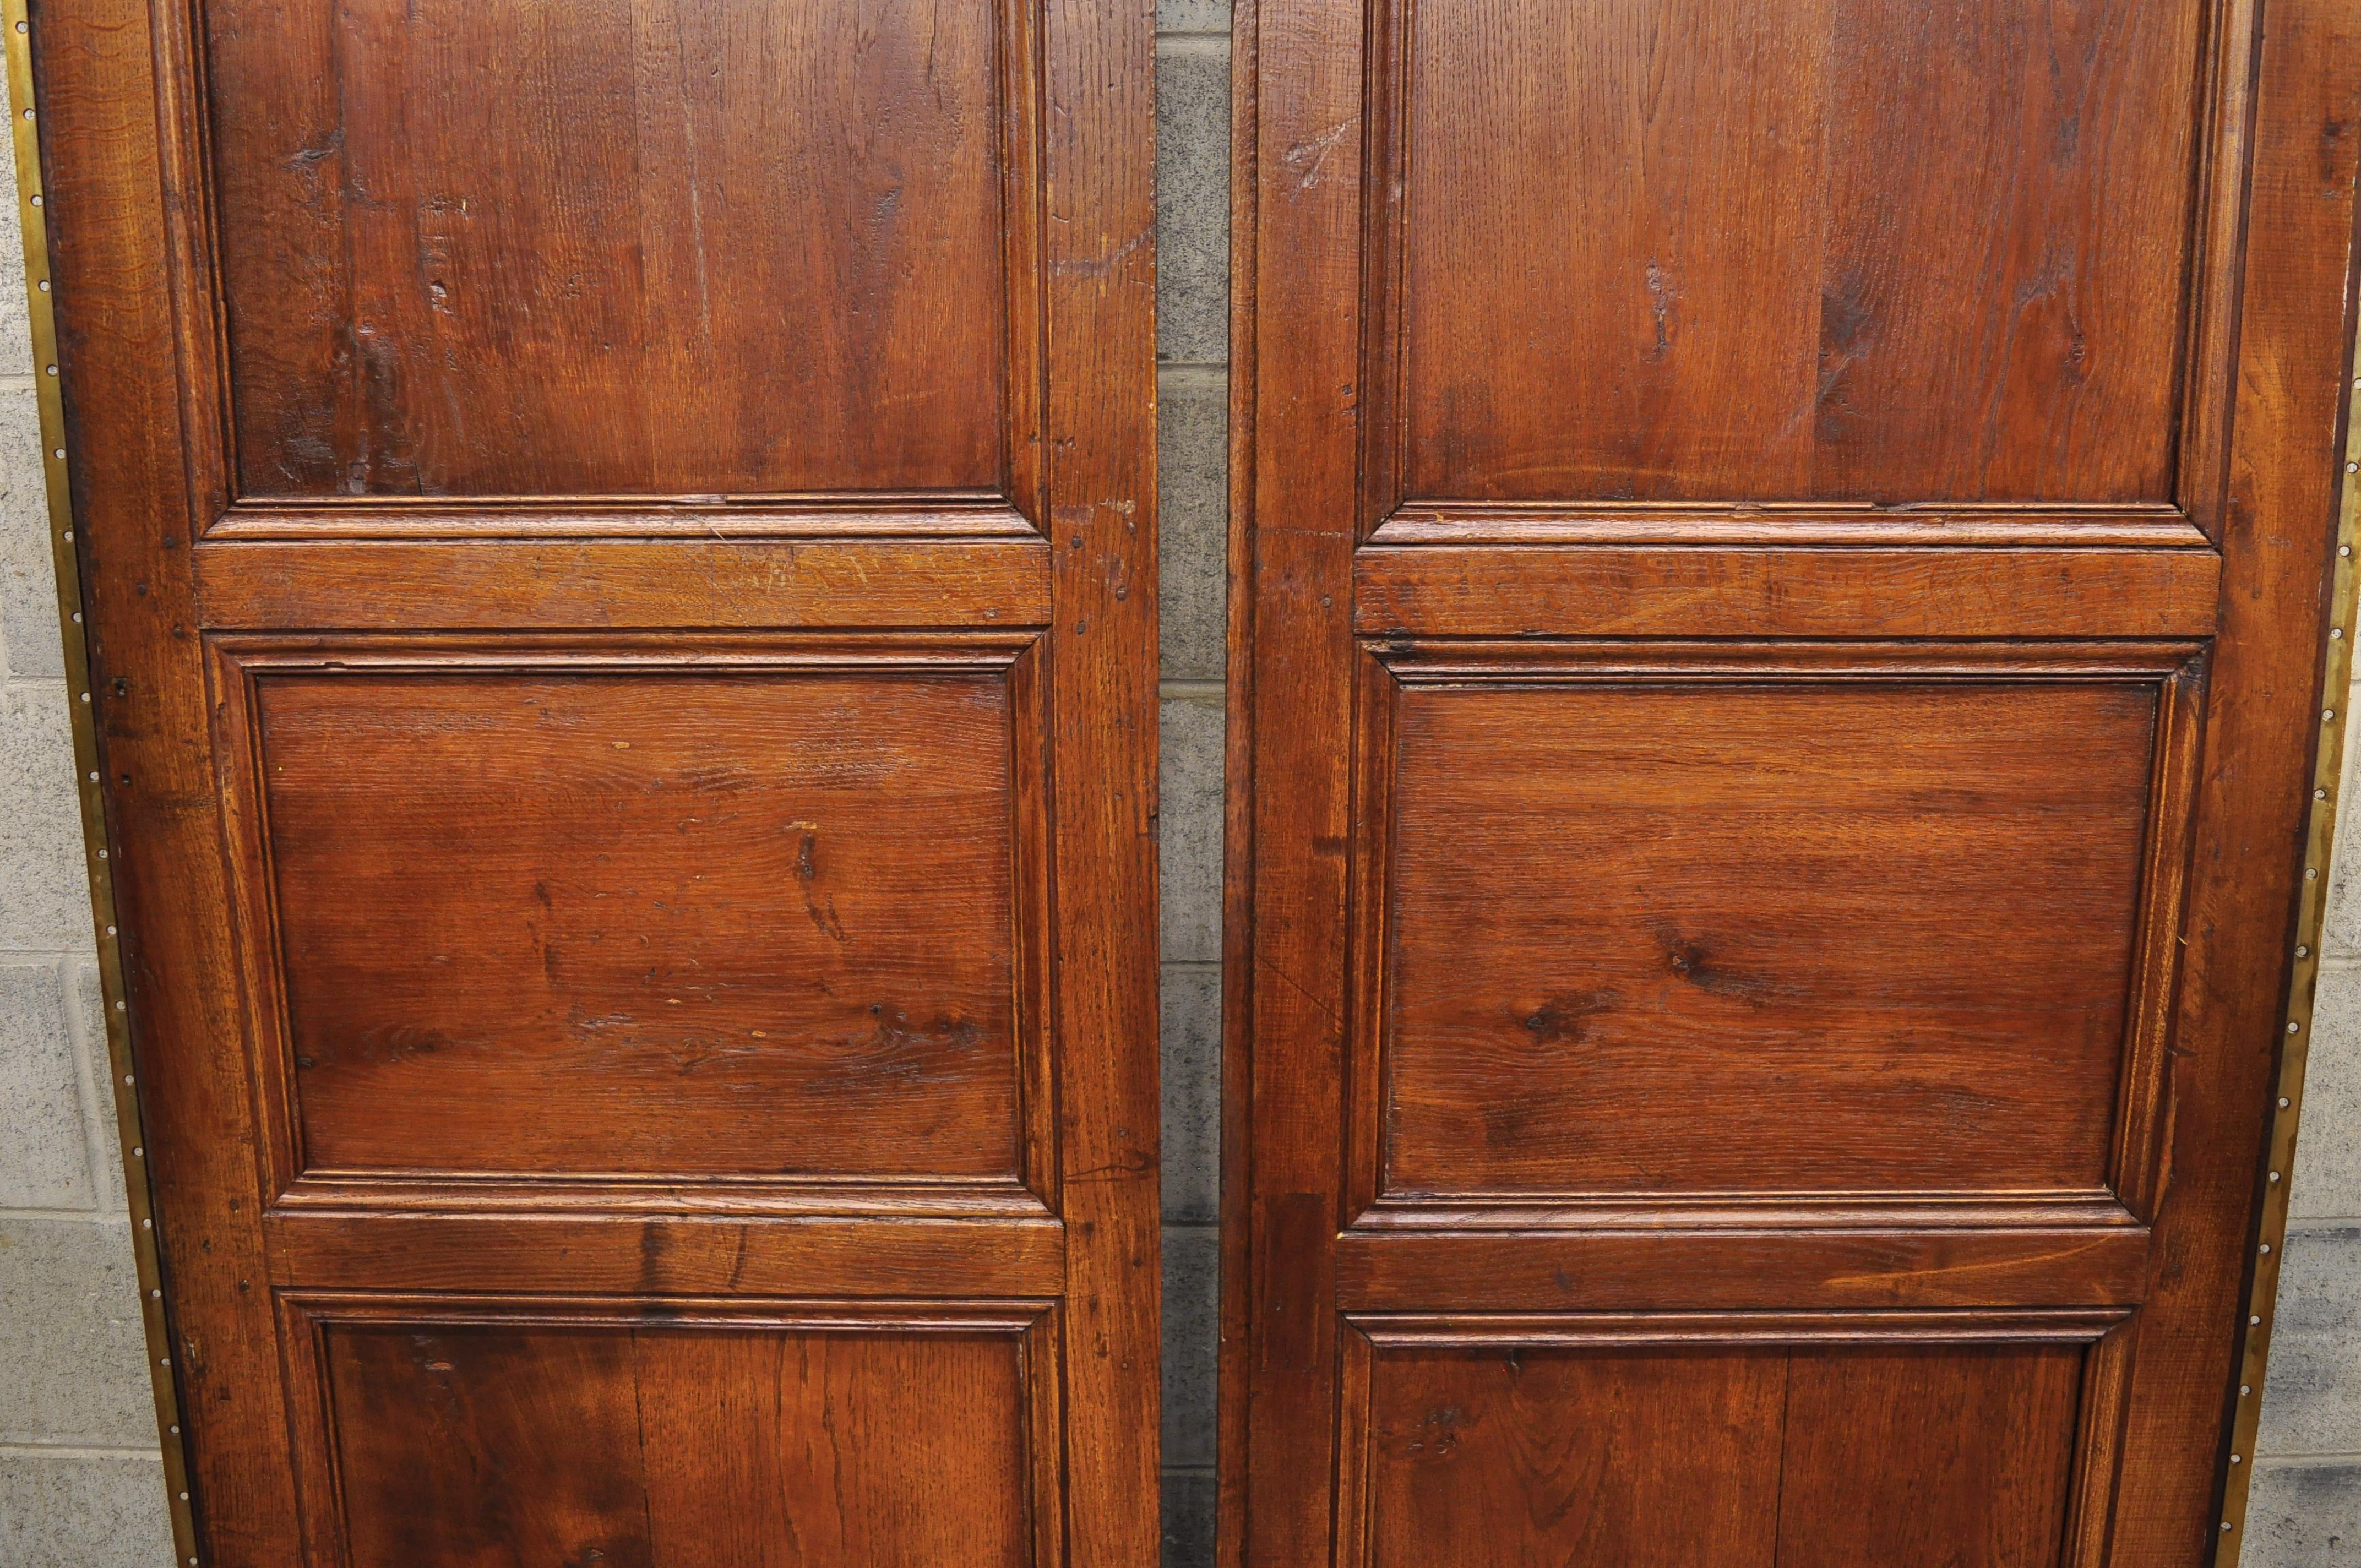 Pair of antique French Louis XVI style carved oak interior double doors with bronze rococo door knobs (B) circa 19th century. Measurements: (Each door) 91